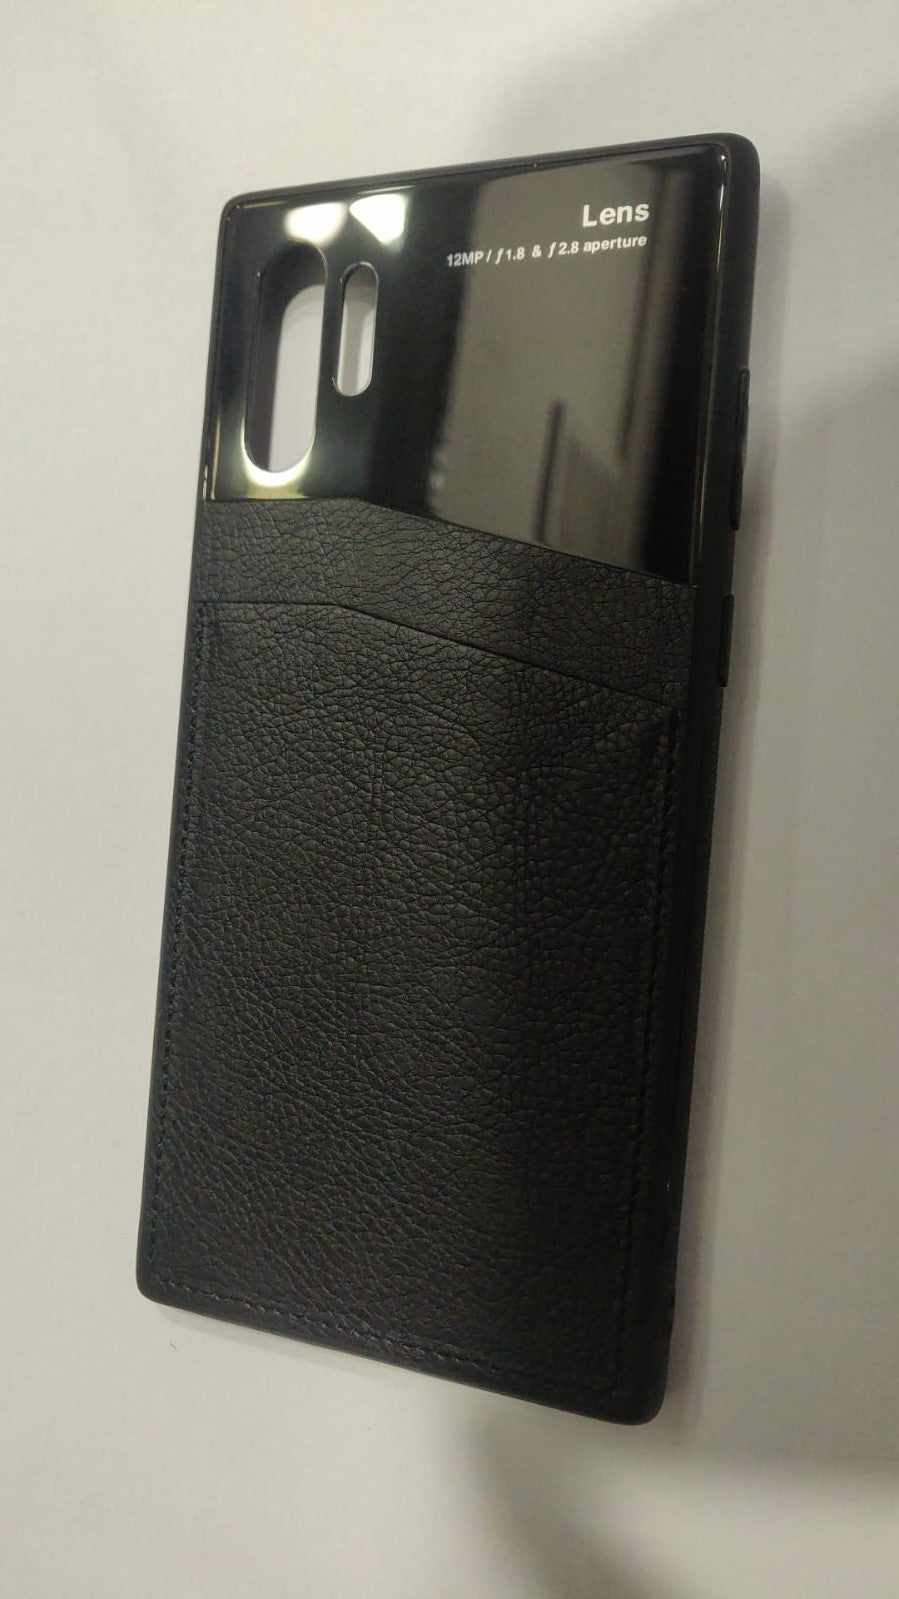 Galaxy Note10 Pro Cover Black